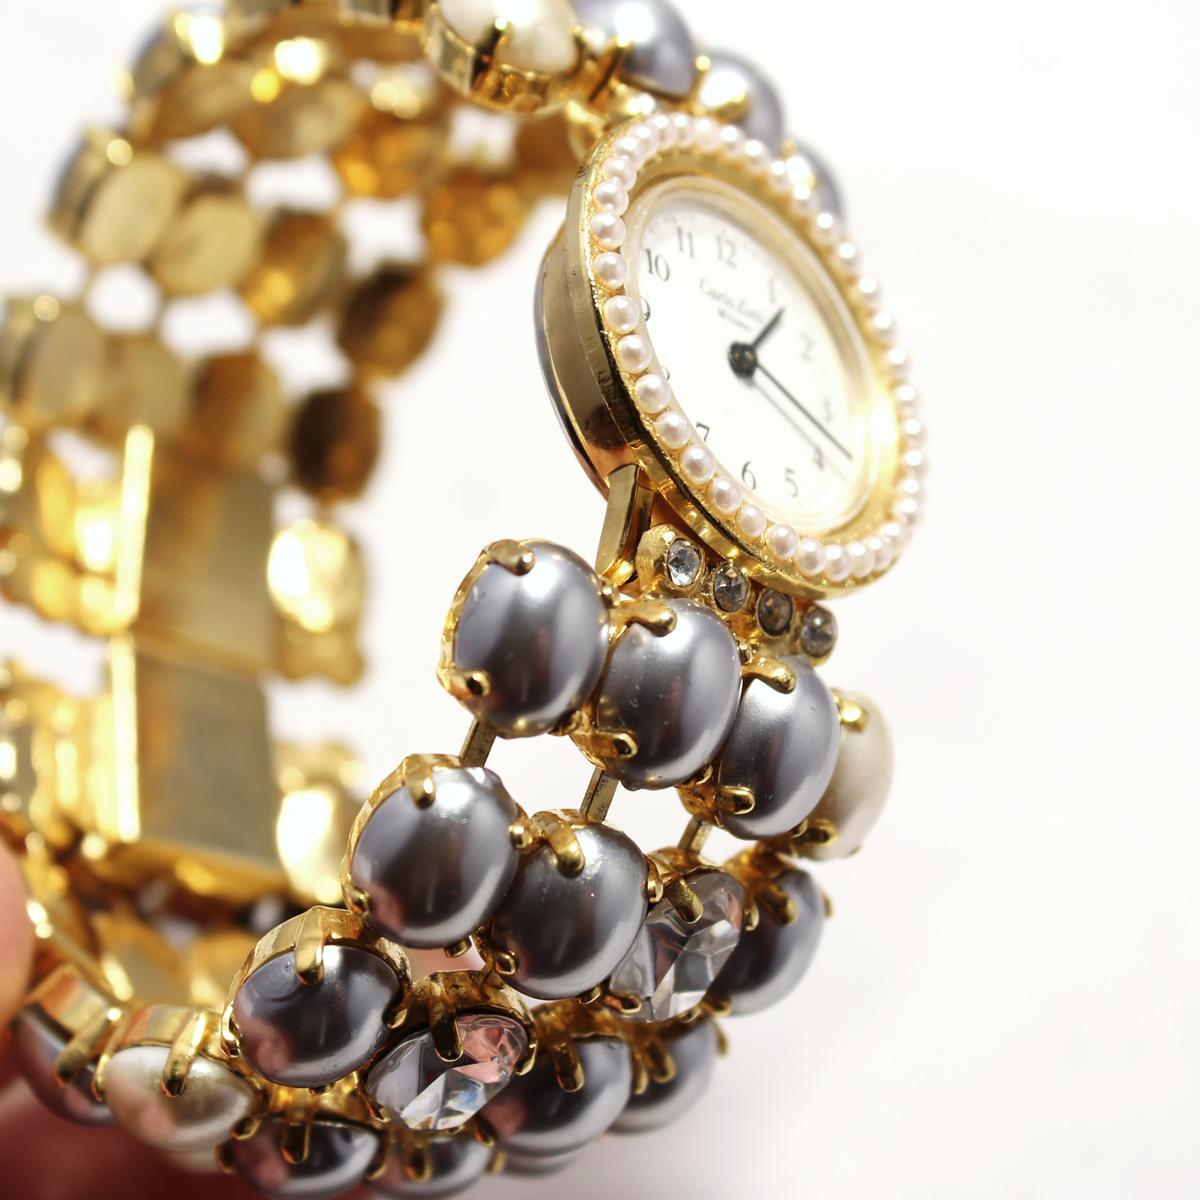 Carlo Zini Jewel Watch For Sale 1